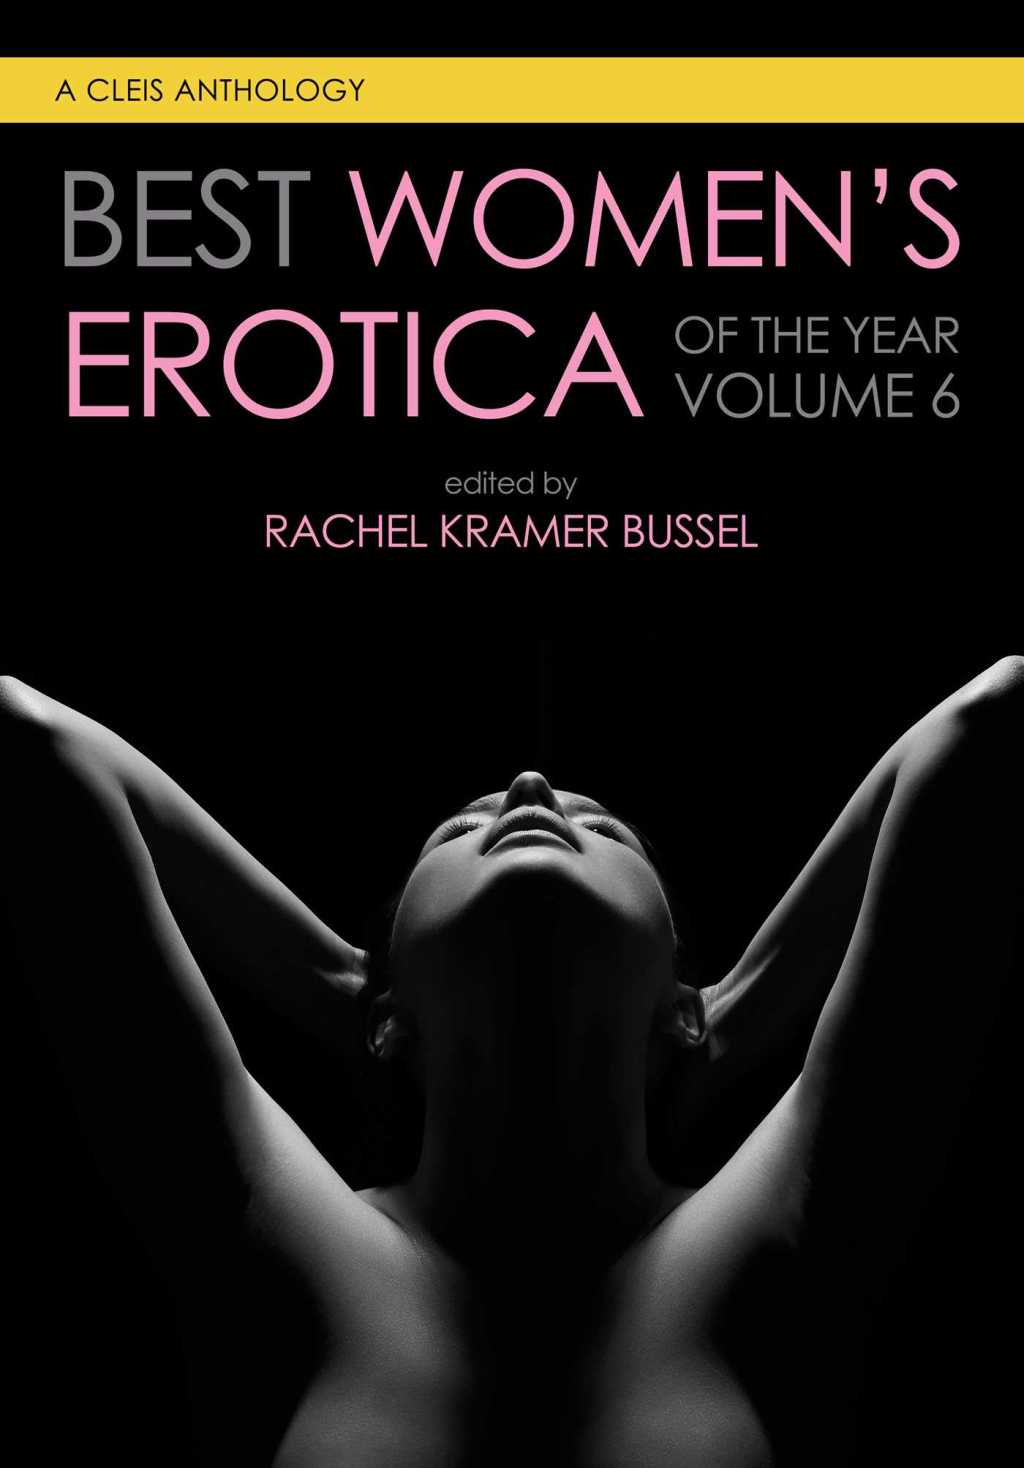 Book Review: Best Women’s Erotica of the Year, Volume 6 edited by Rachel Kramer Bussel (erotica)